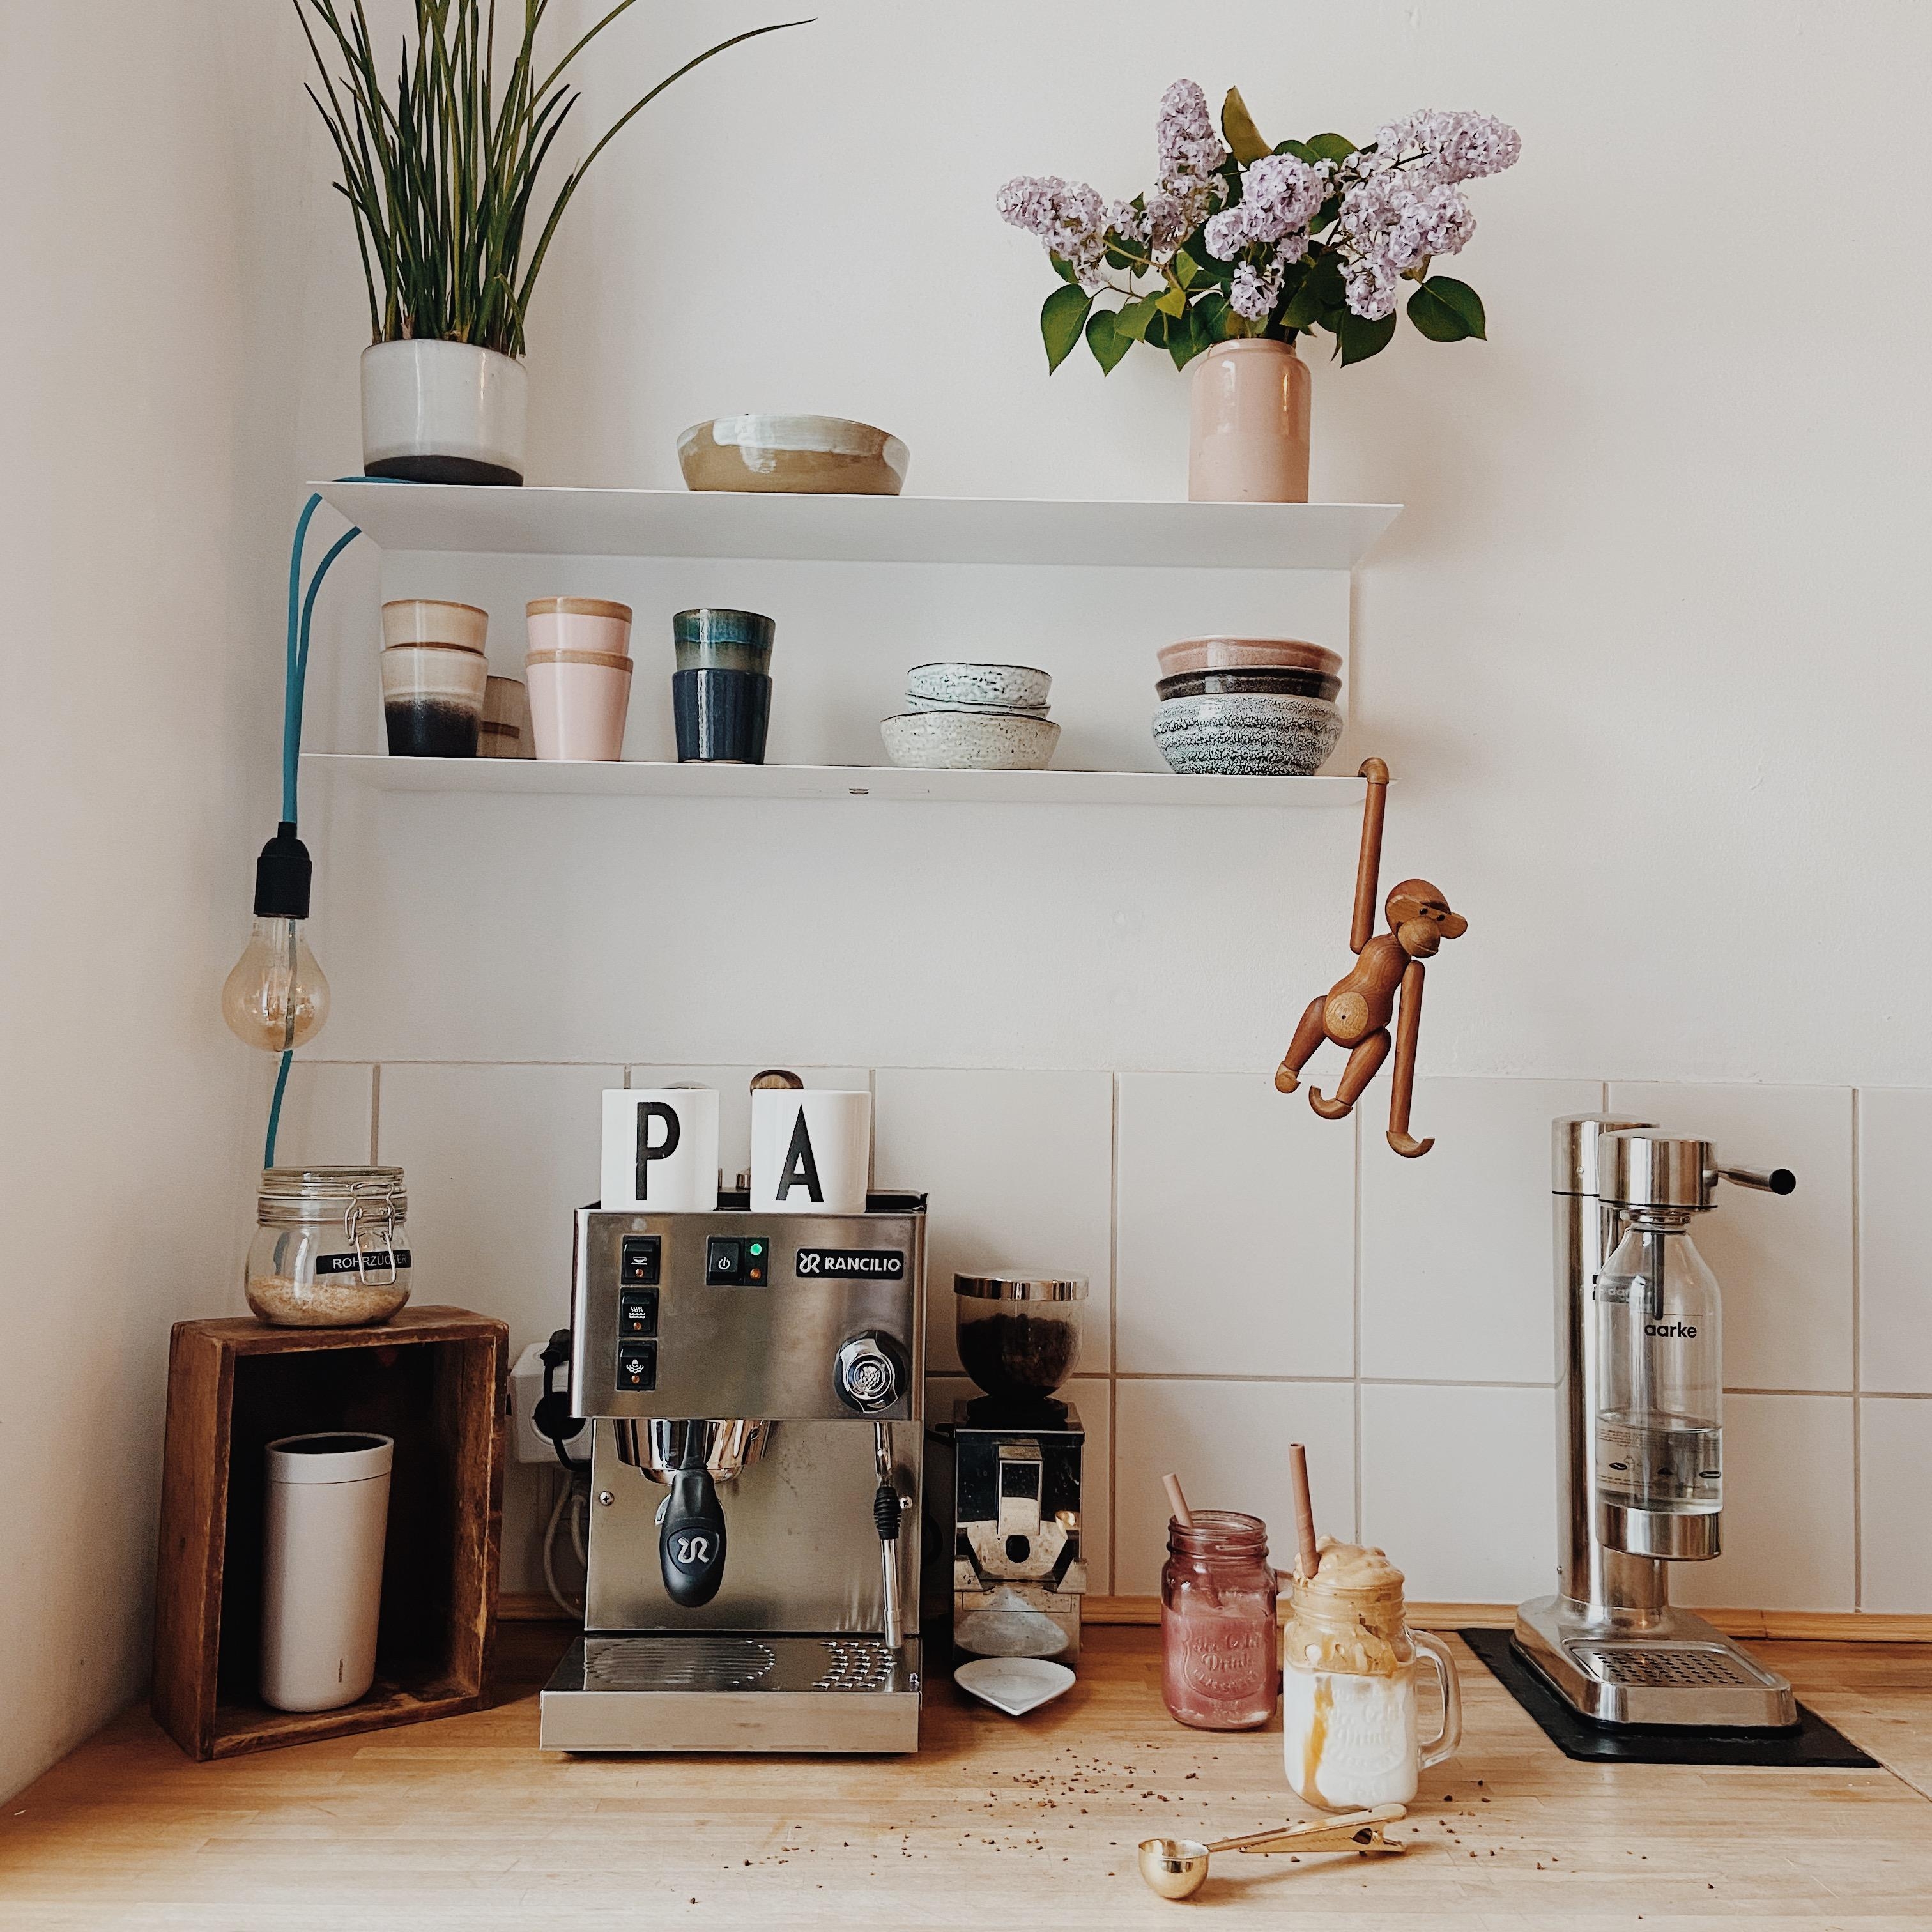 Happy Sunday.
#kitchen #coffee #coffeelover #interior #scandinavian #kitcheninspiration #altbauliebe #interiordesign